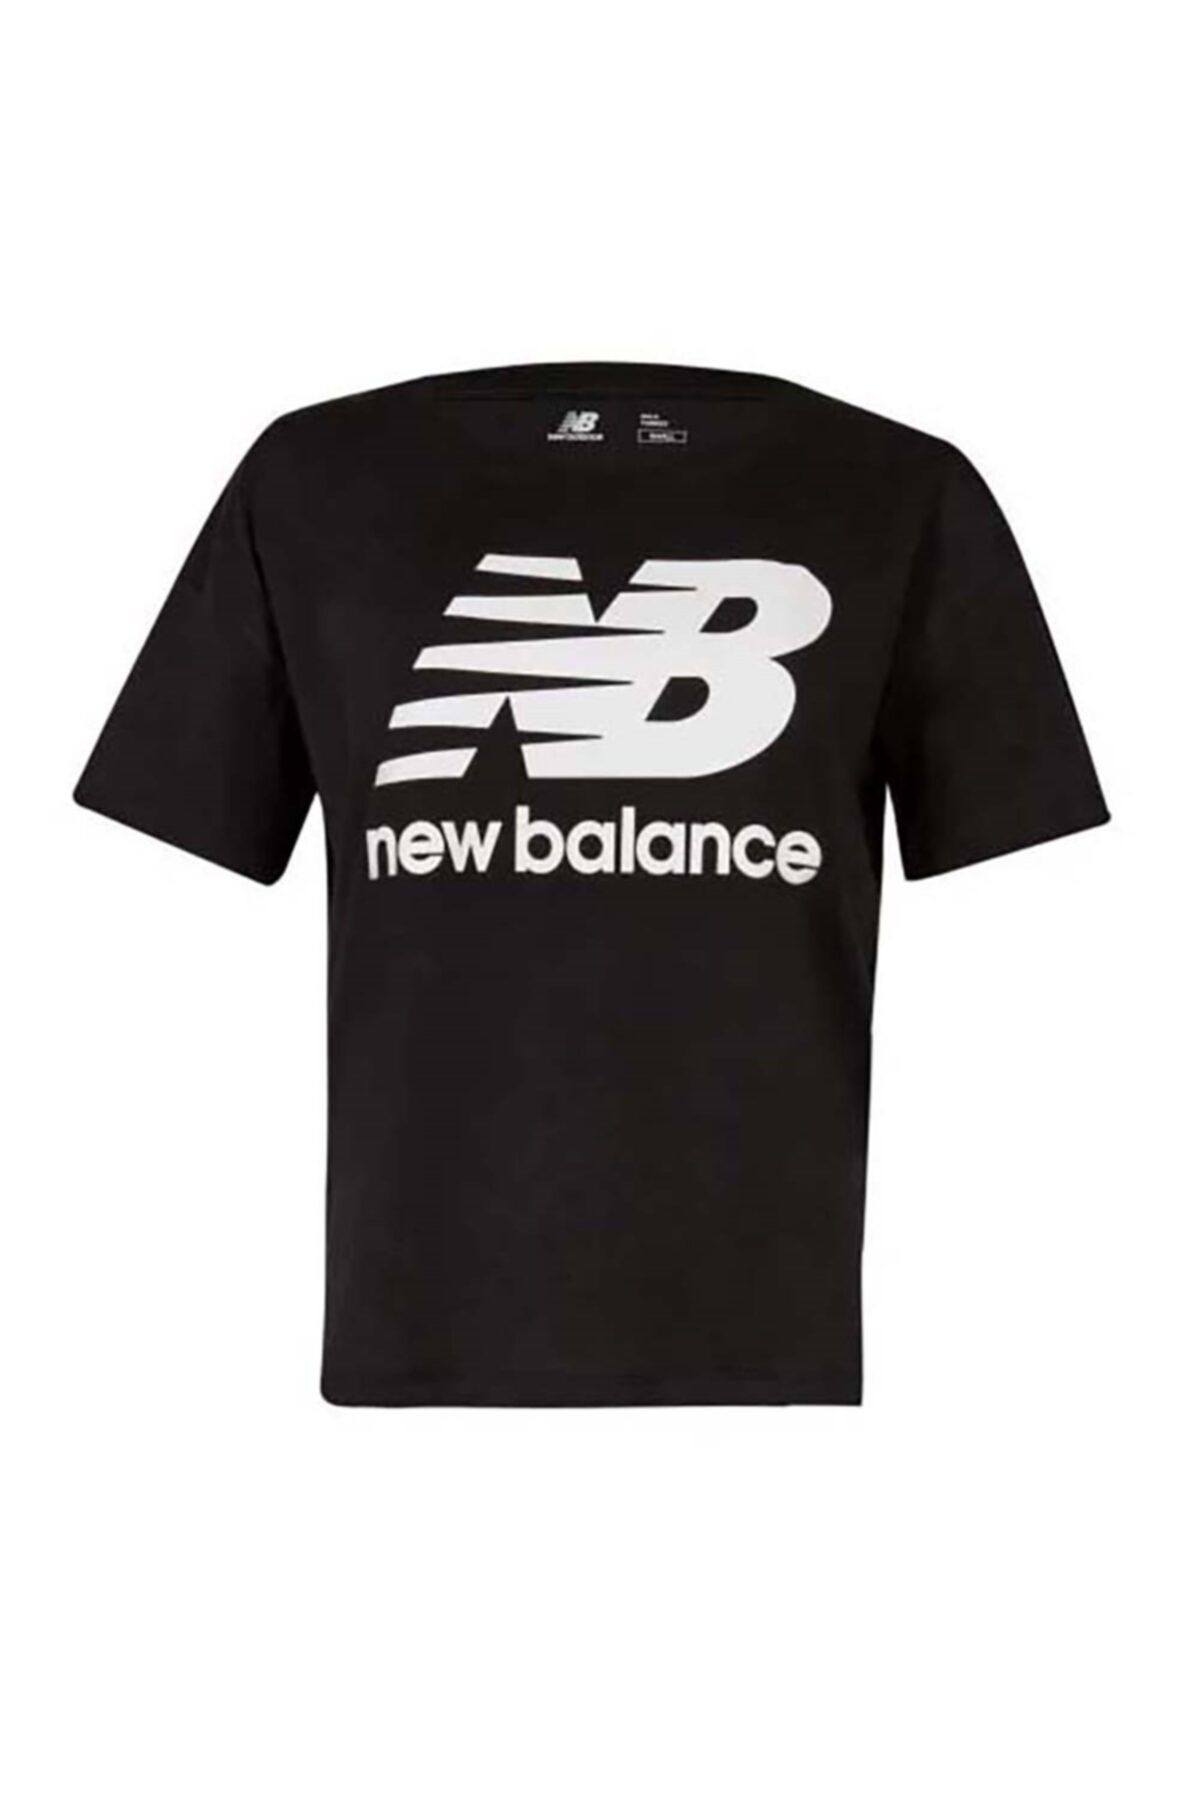 New Balance Nb Womens Lifestyle T-shirt